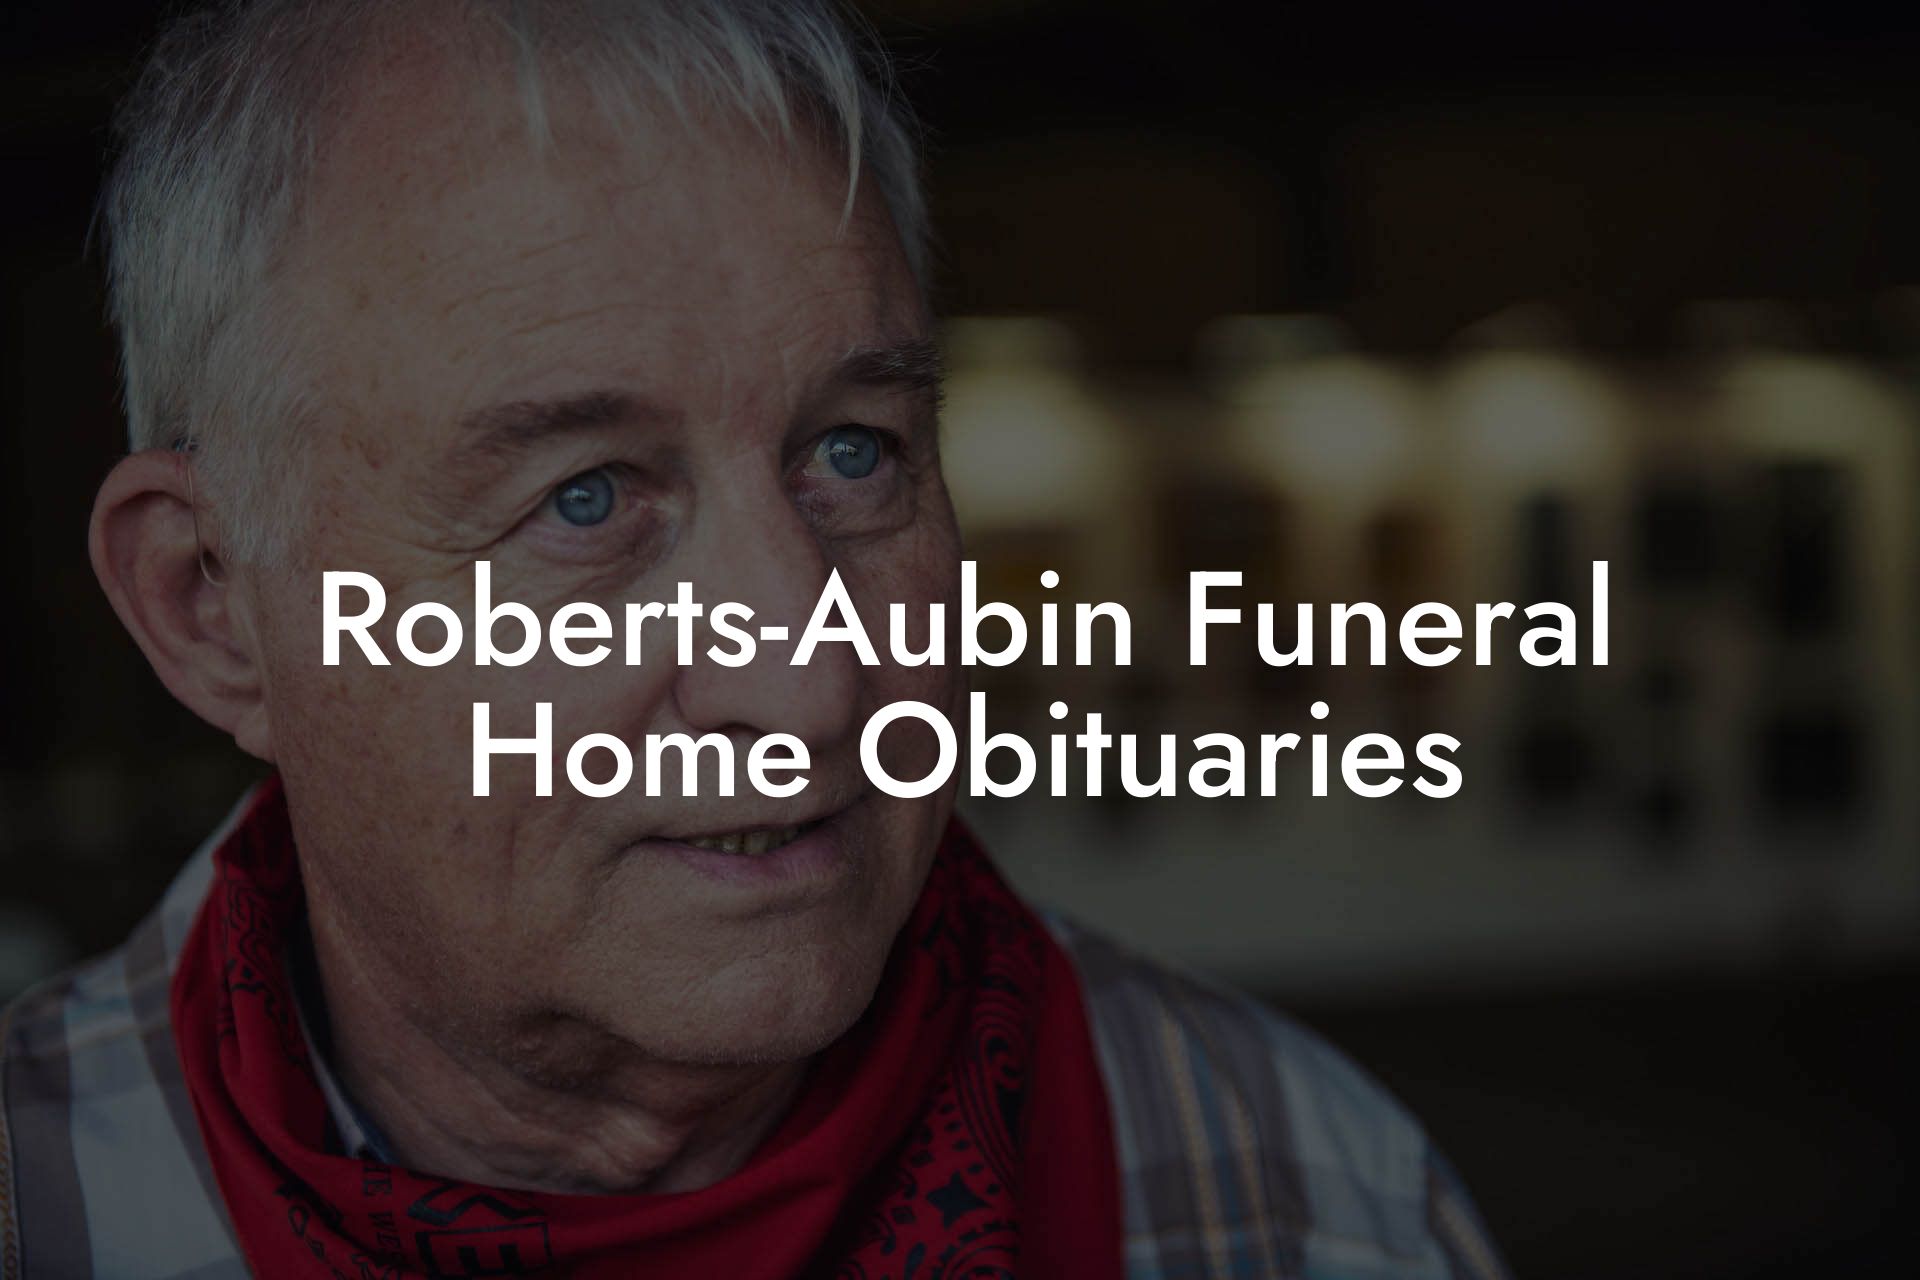 Roberts-Aubin Funeral Home Obituaries